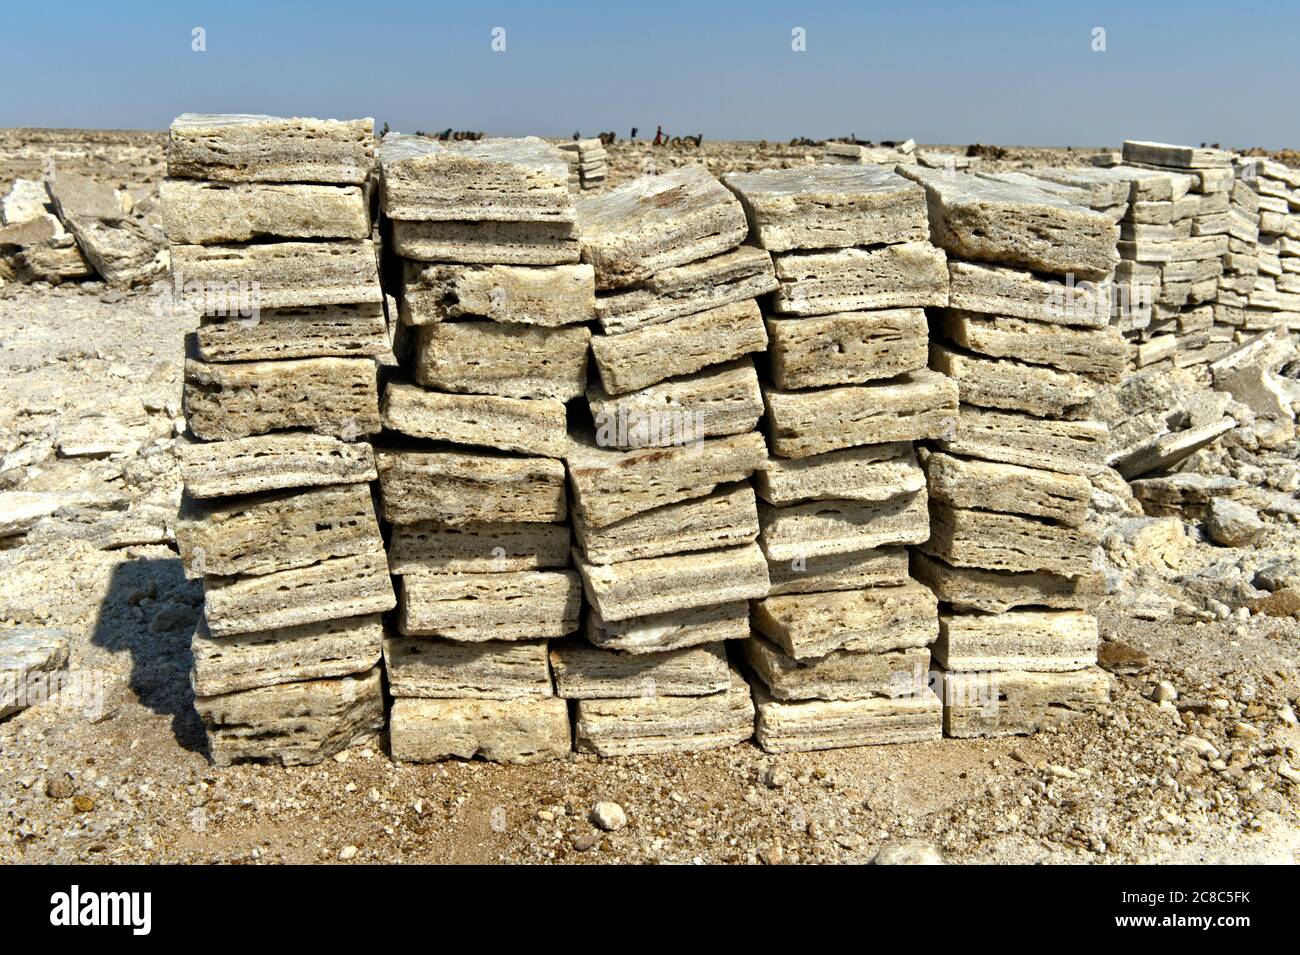 Salt slabs are ready for loading onto dromedaries, at Hamadela, Danakil Depression, Afar Region, Ethiopia Stock Photo